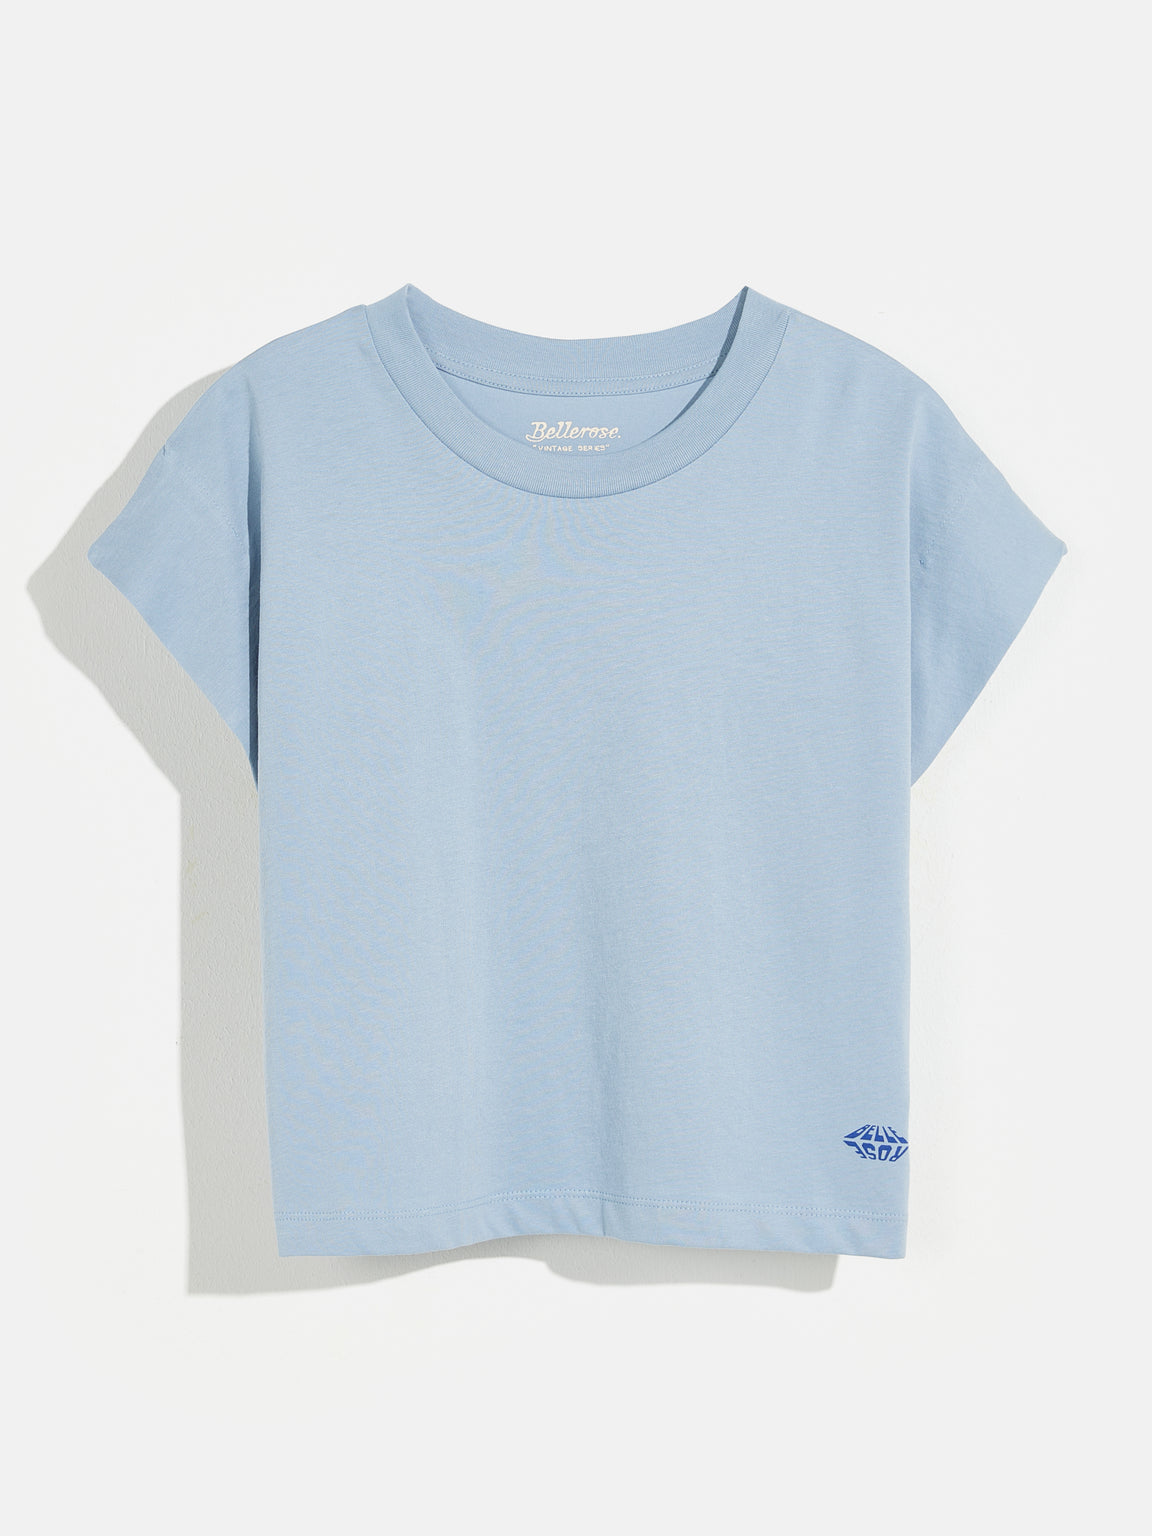 Crom T-shirt - Blue | Girls Collection | Bellerose